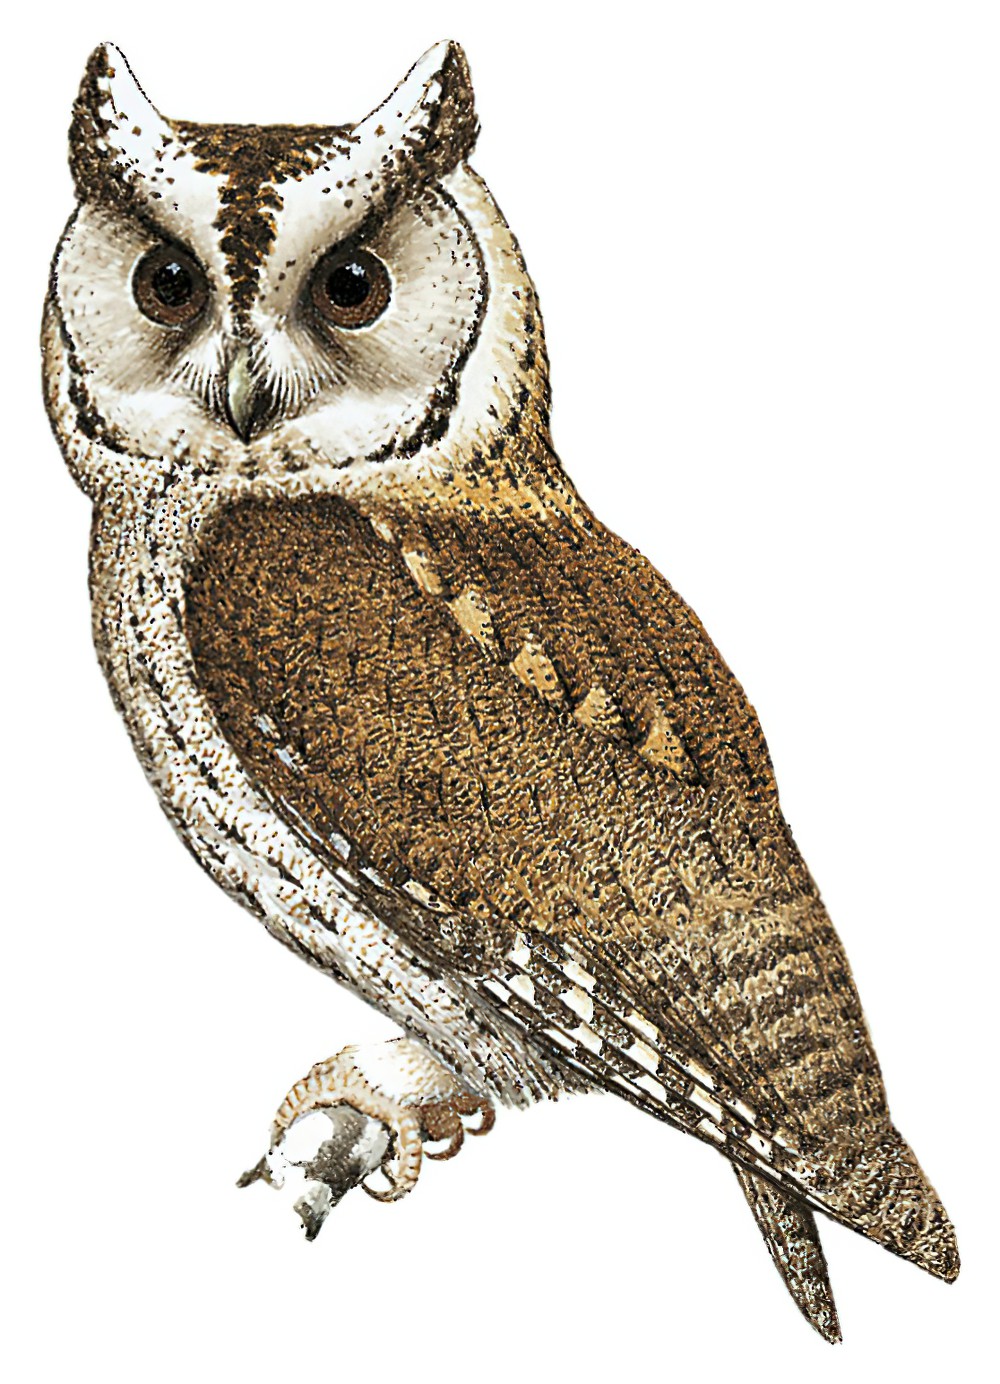 Indian Scops-Owl / Otus bakkamoena